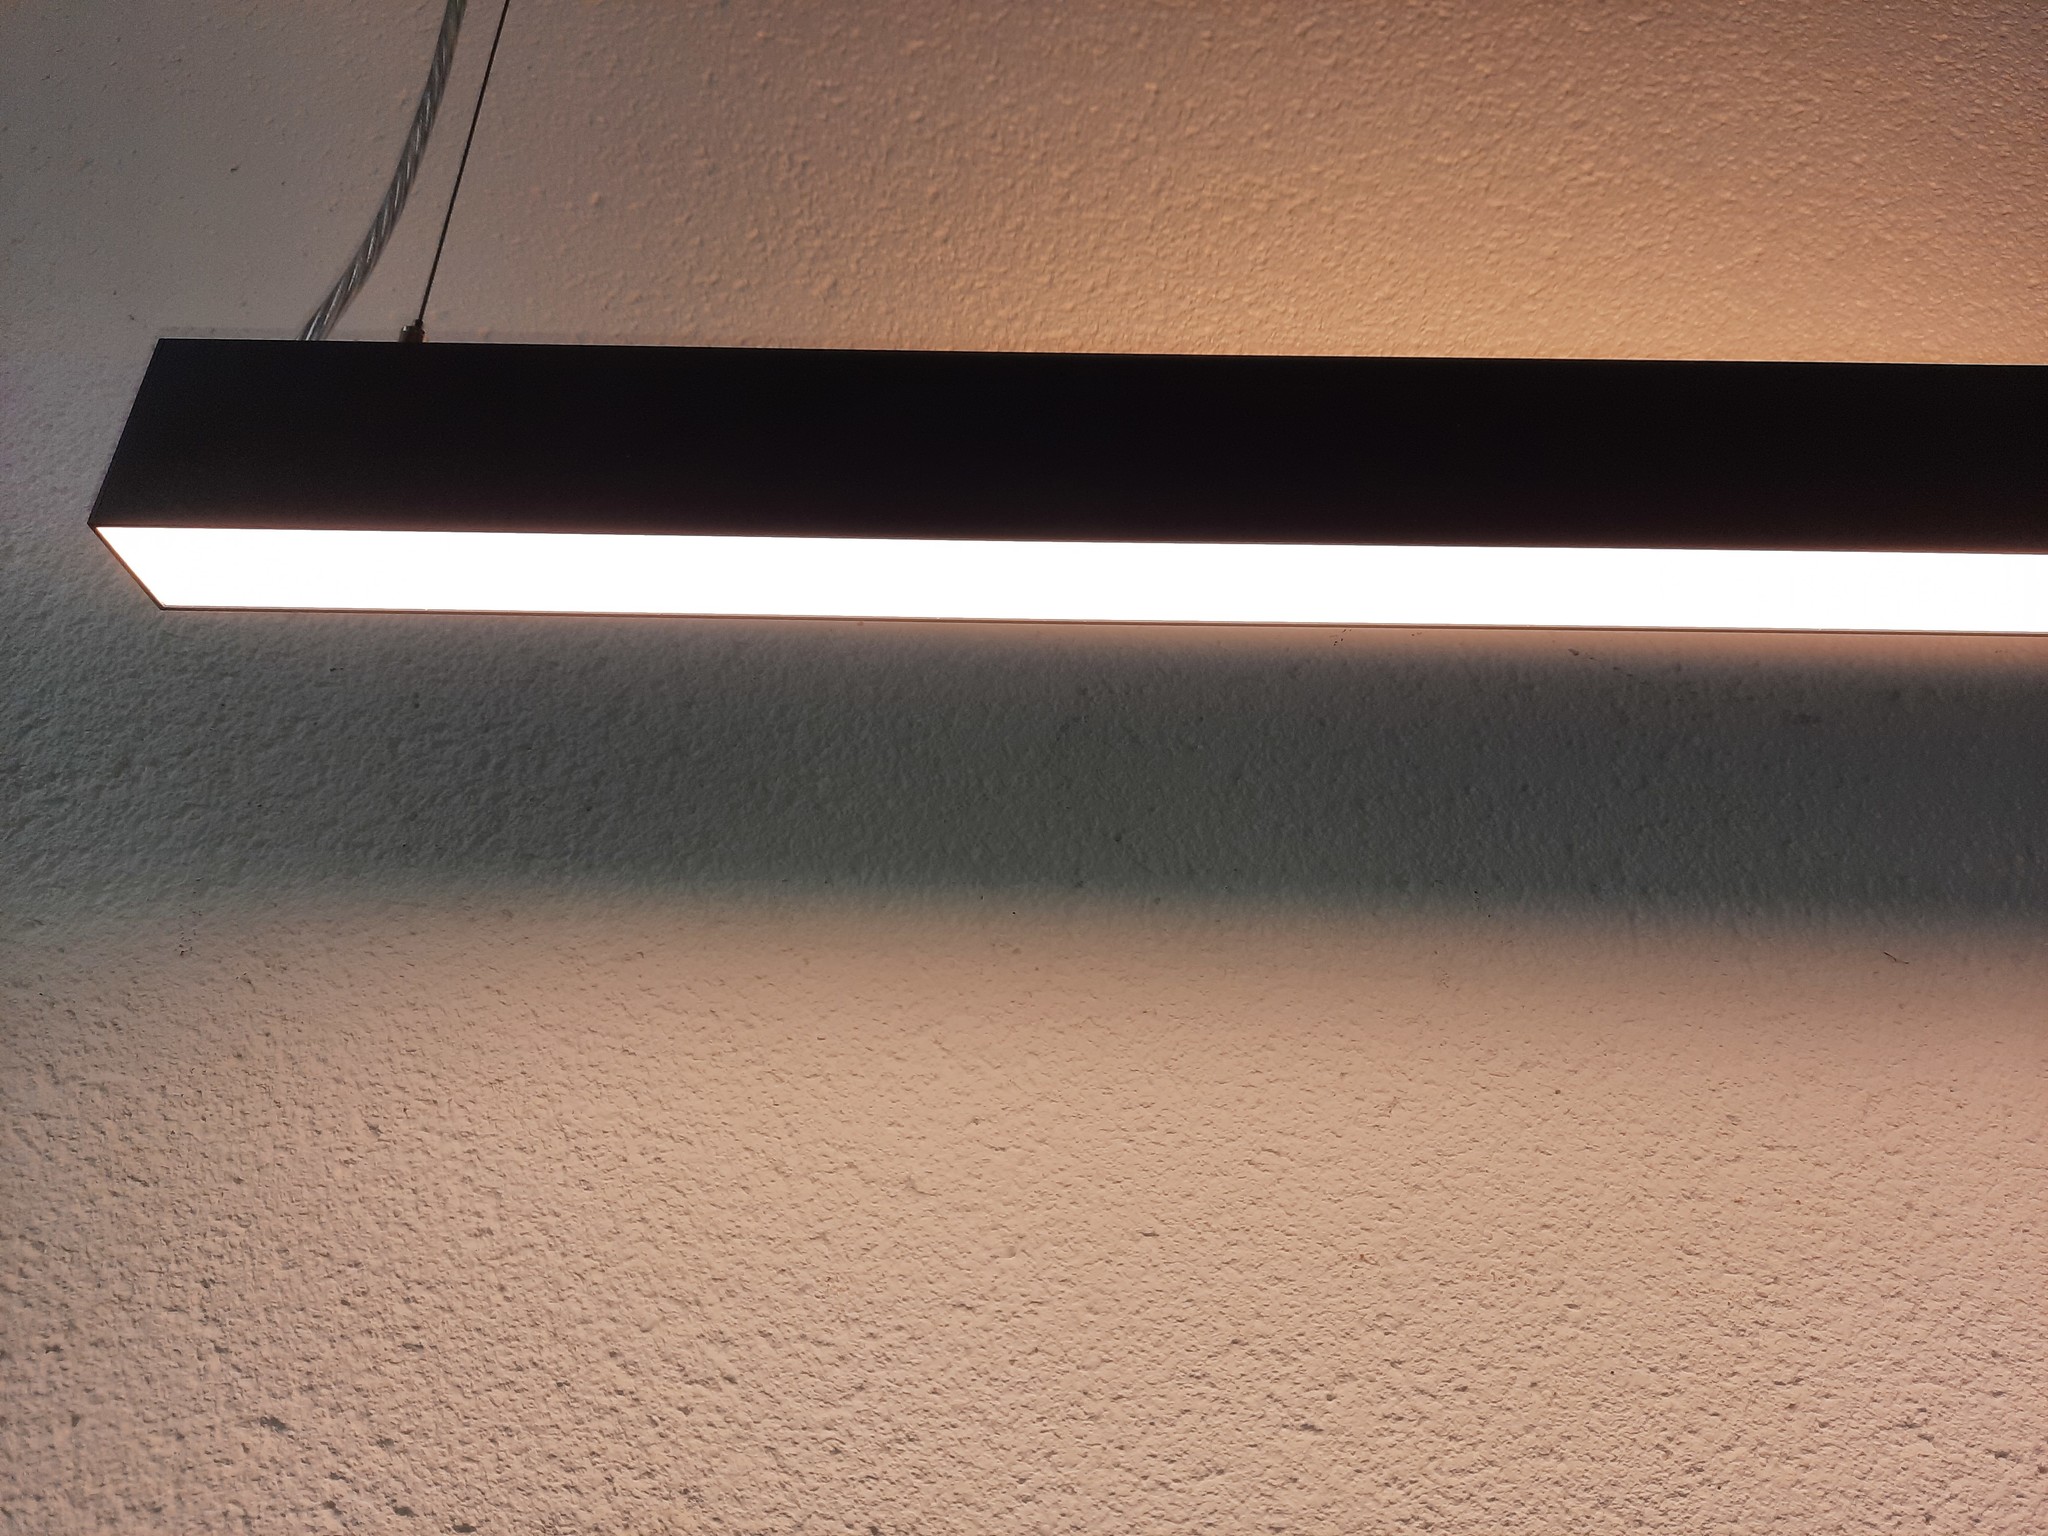 buurman Miljard Christus Hanglamp boven bureau up down LED 48W wit, zwart | My Planet LED